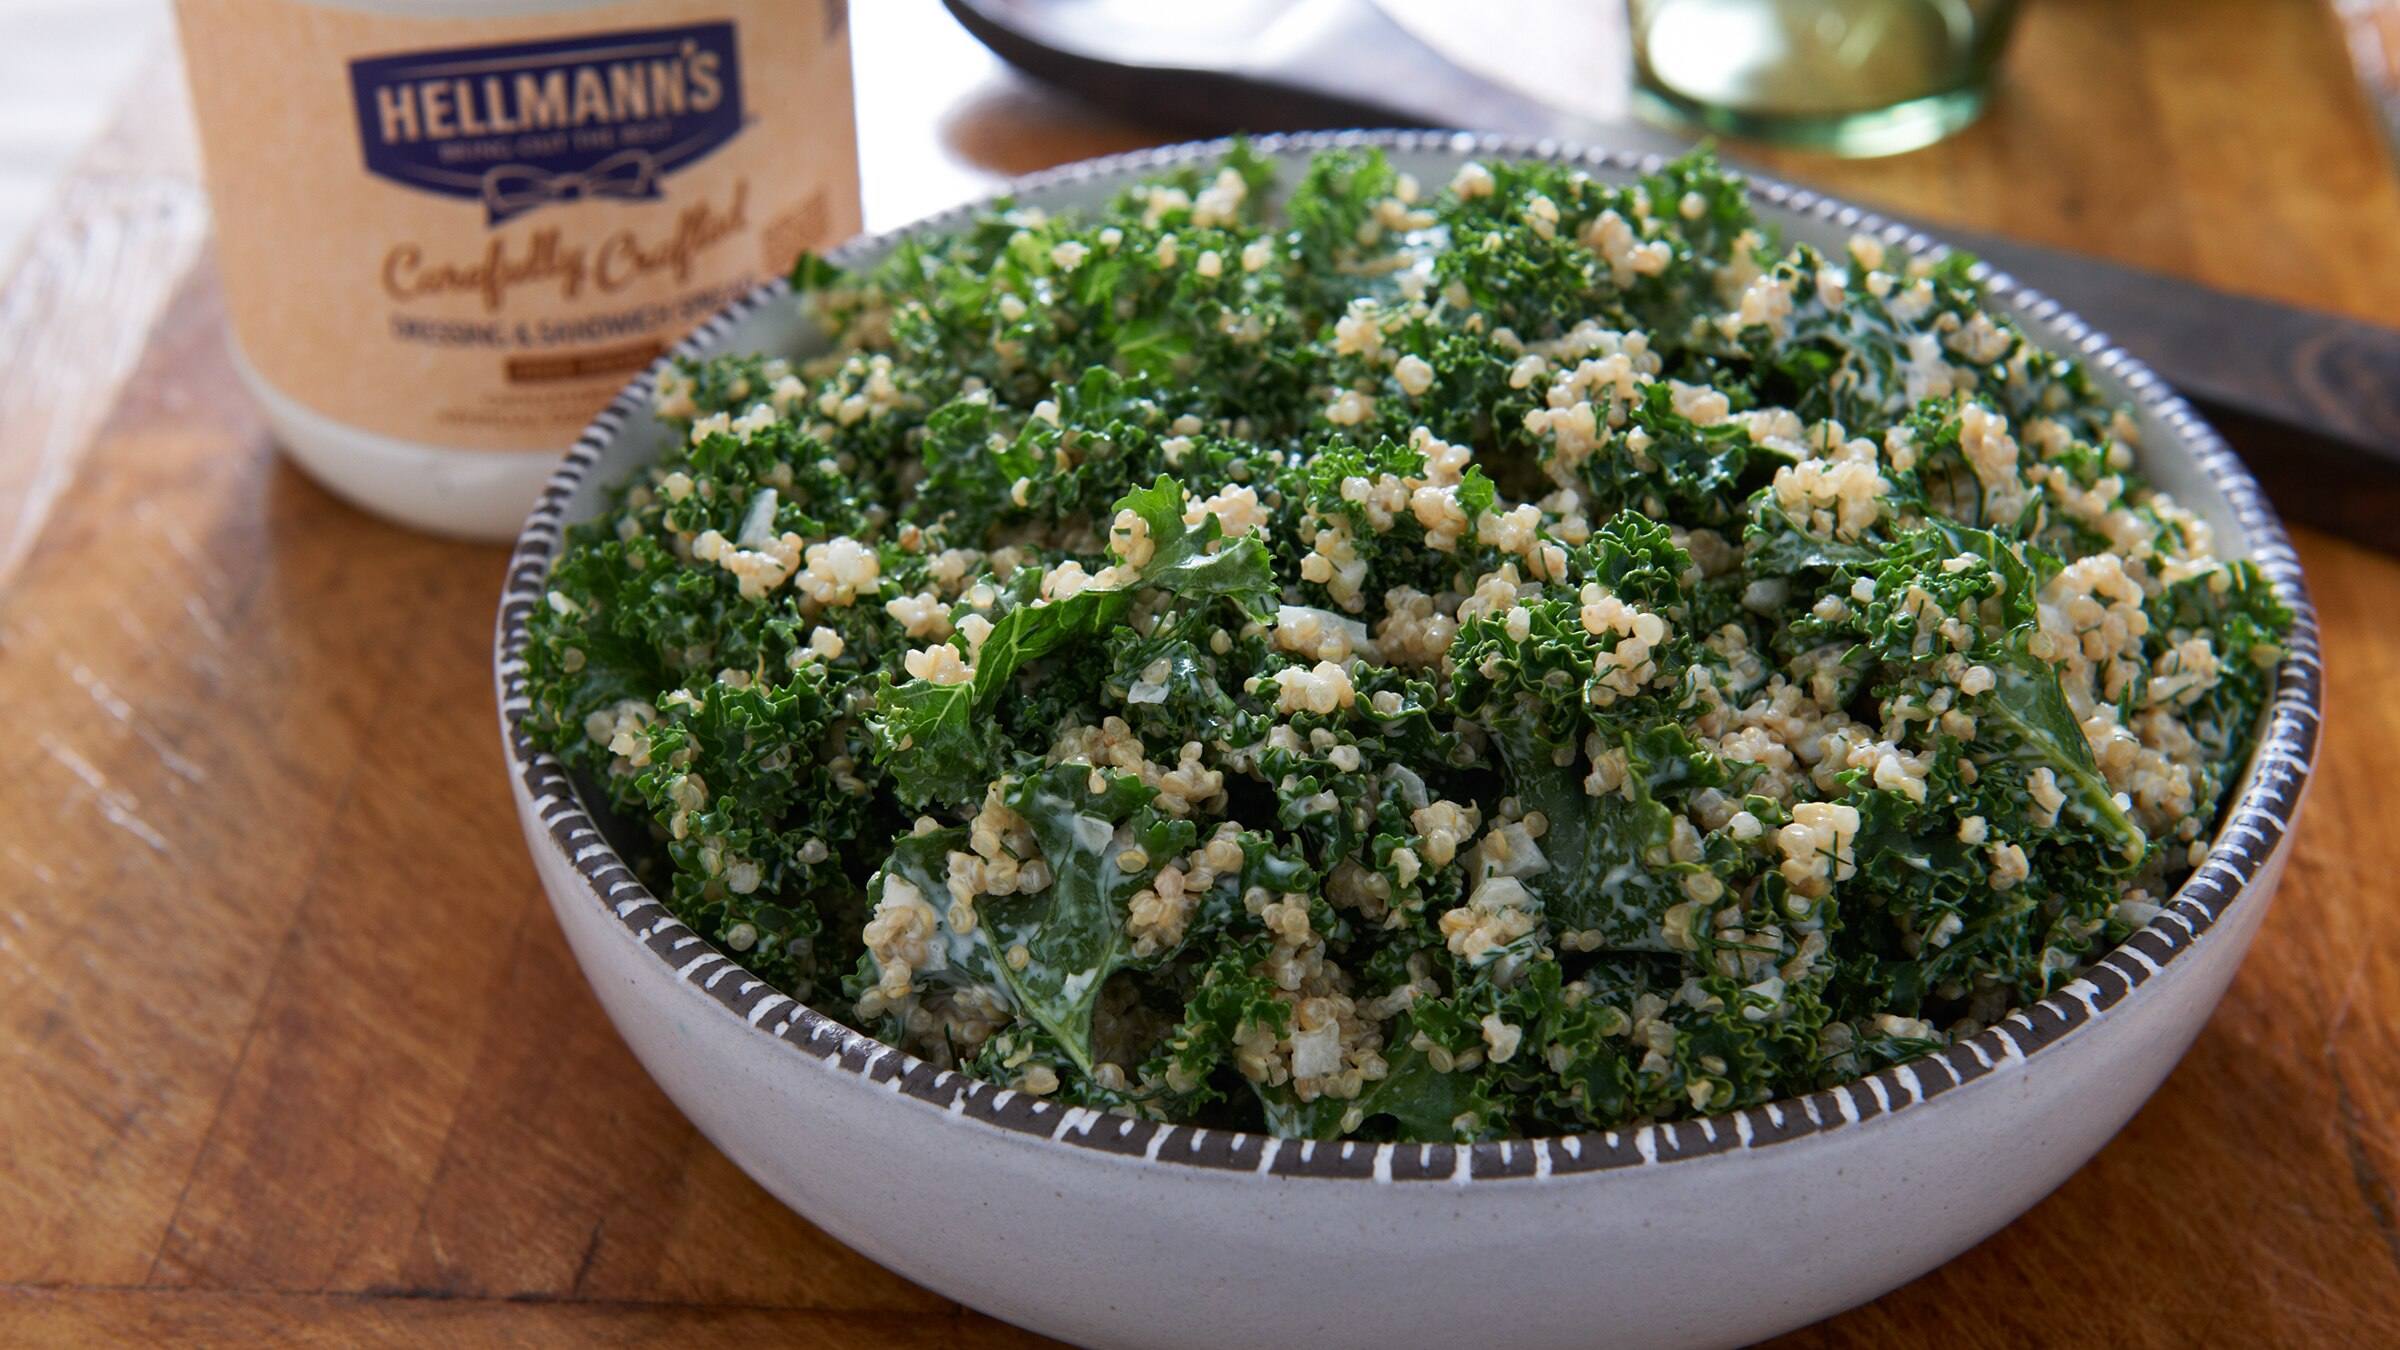 Salade de quinoa et chou vert frisé avec herbes fraîches